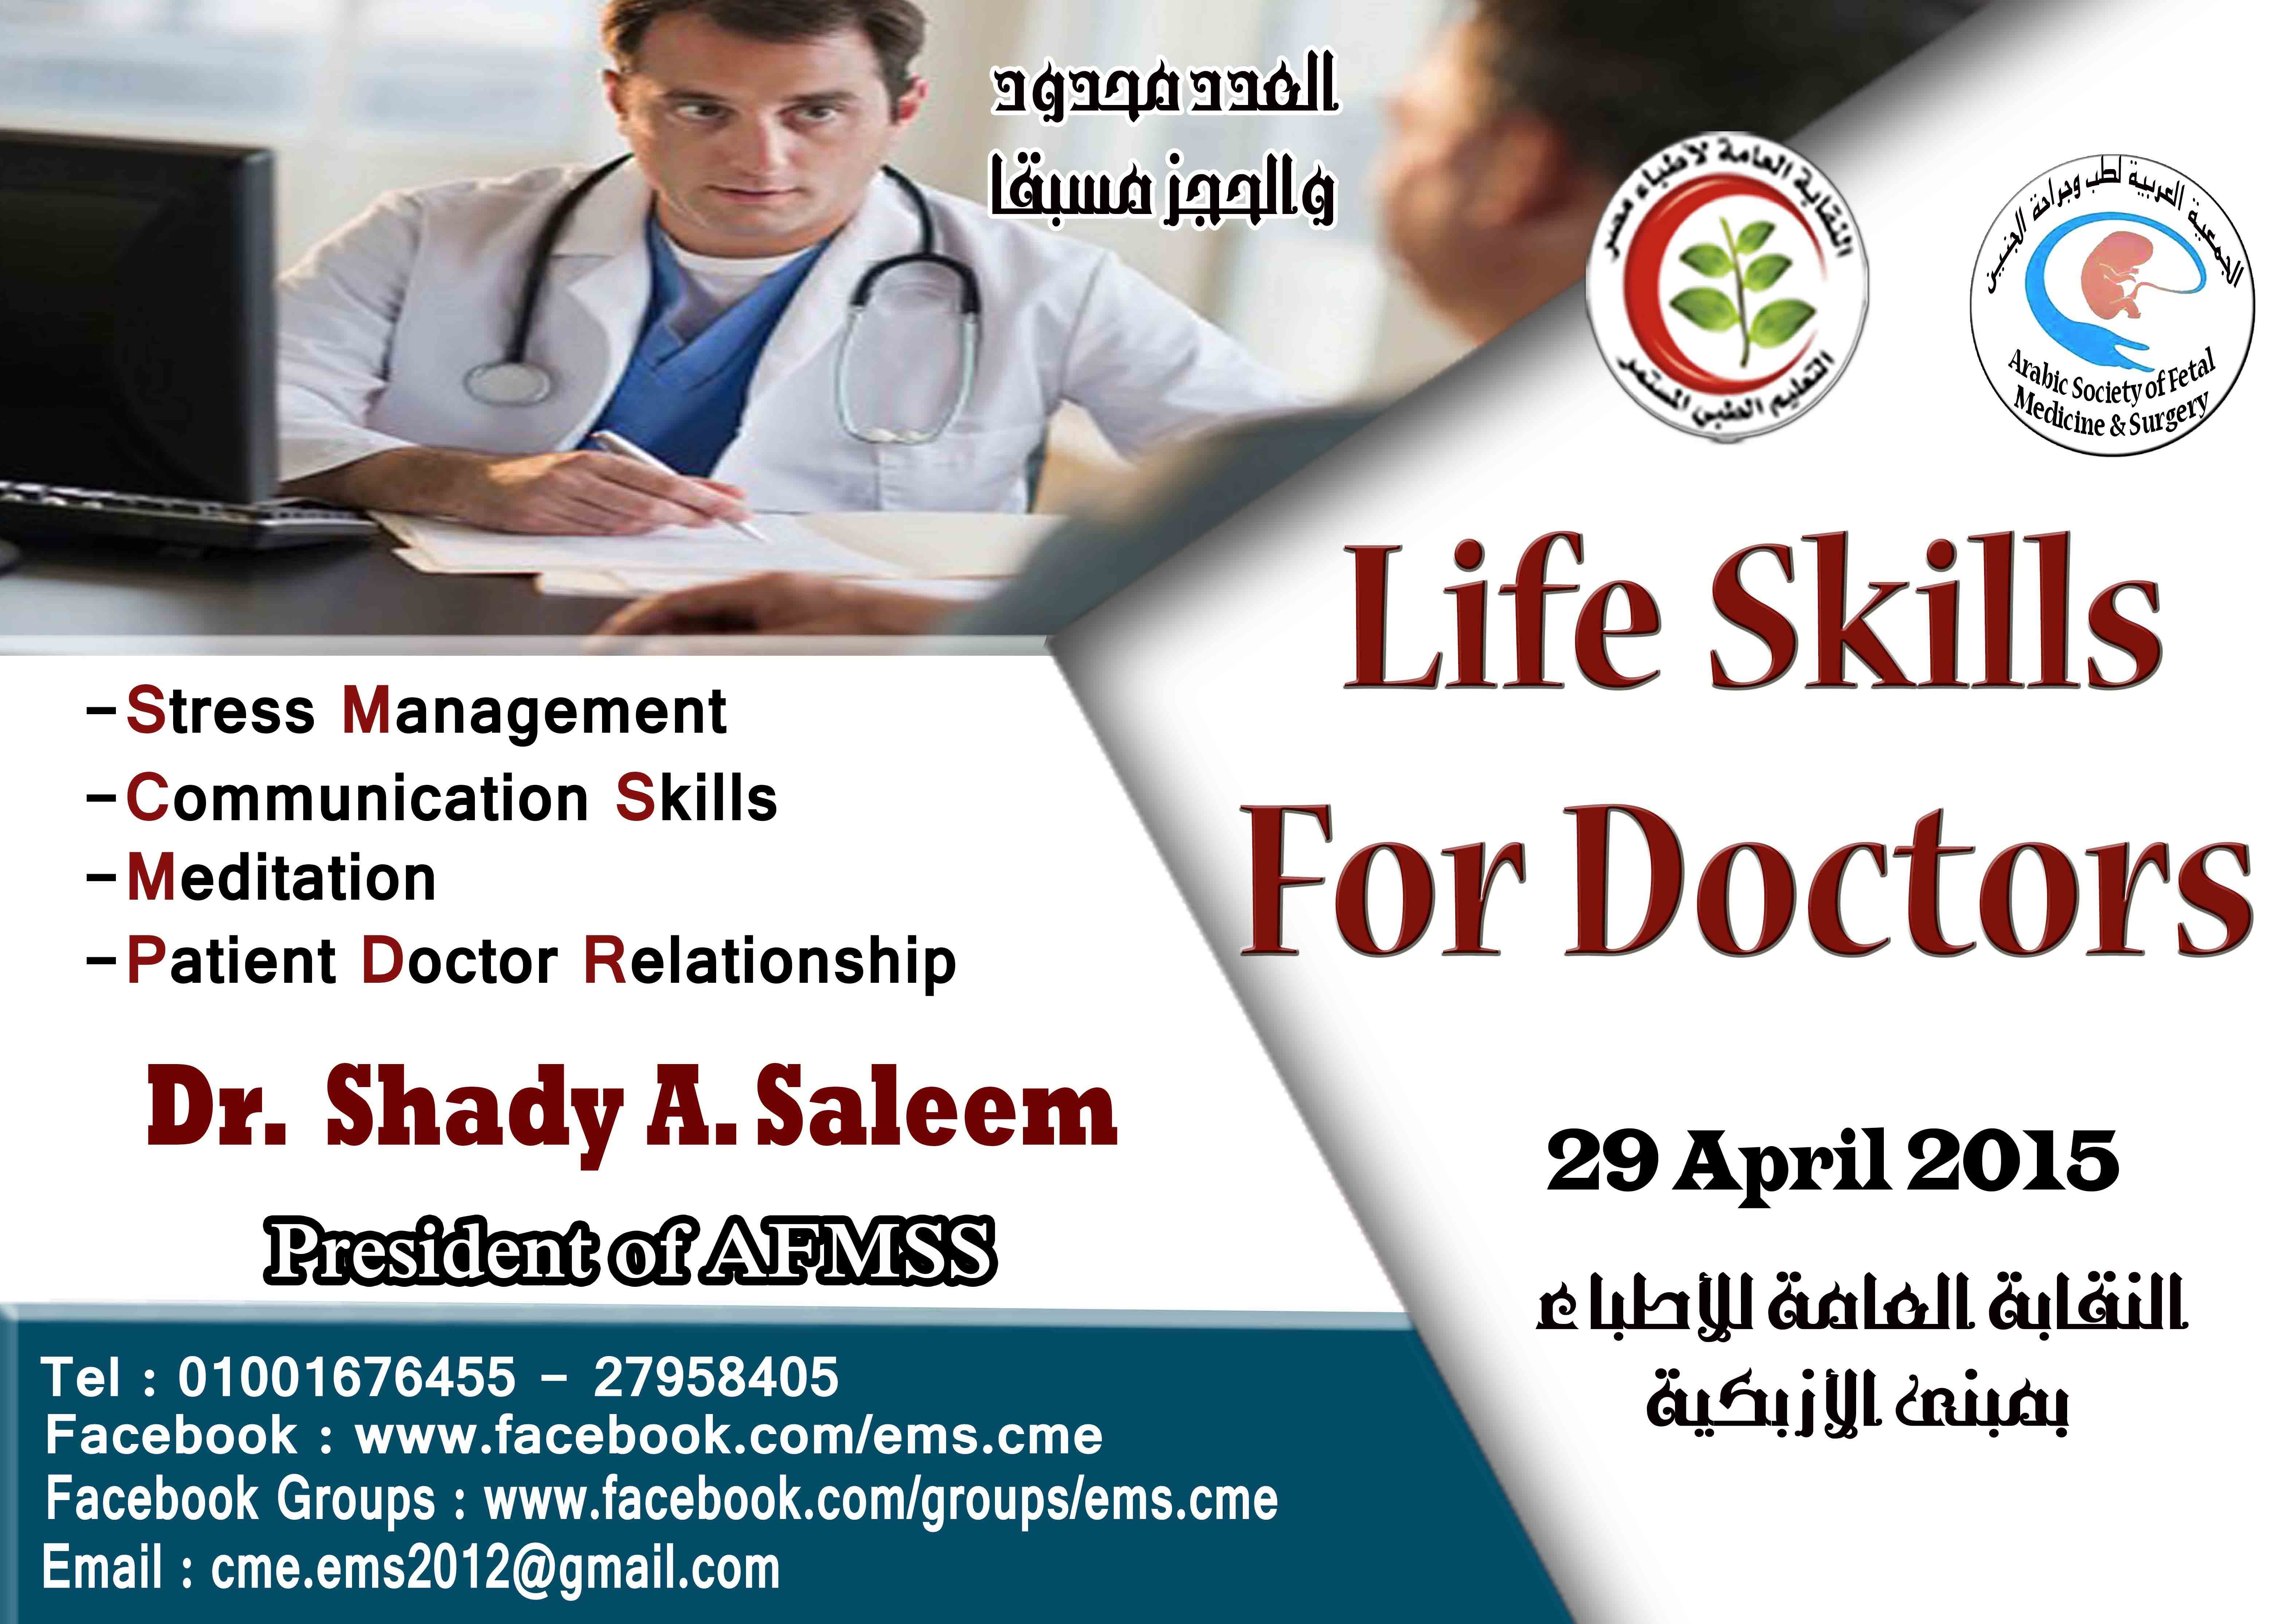 Life Skills for Doctors